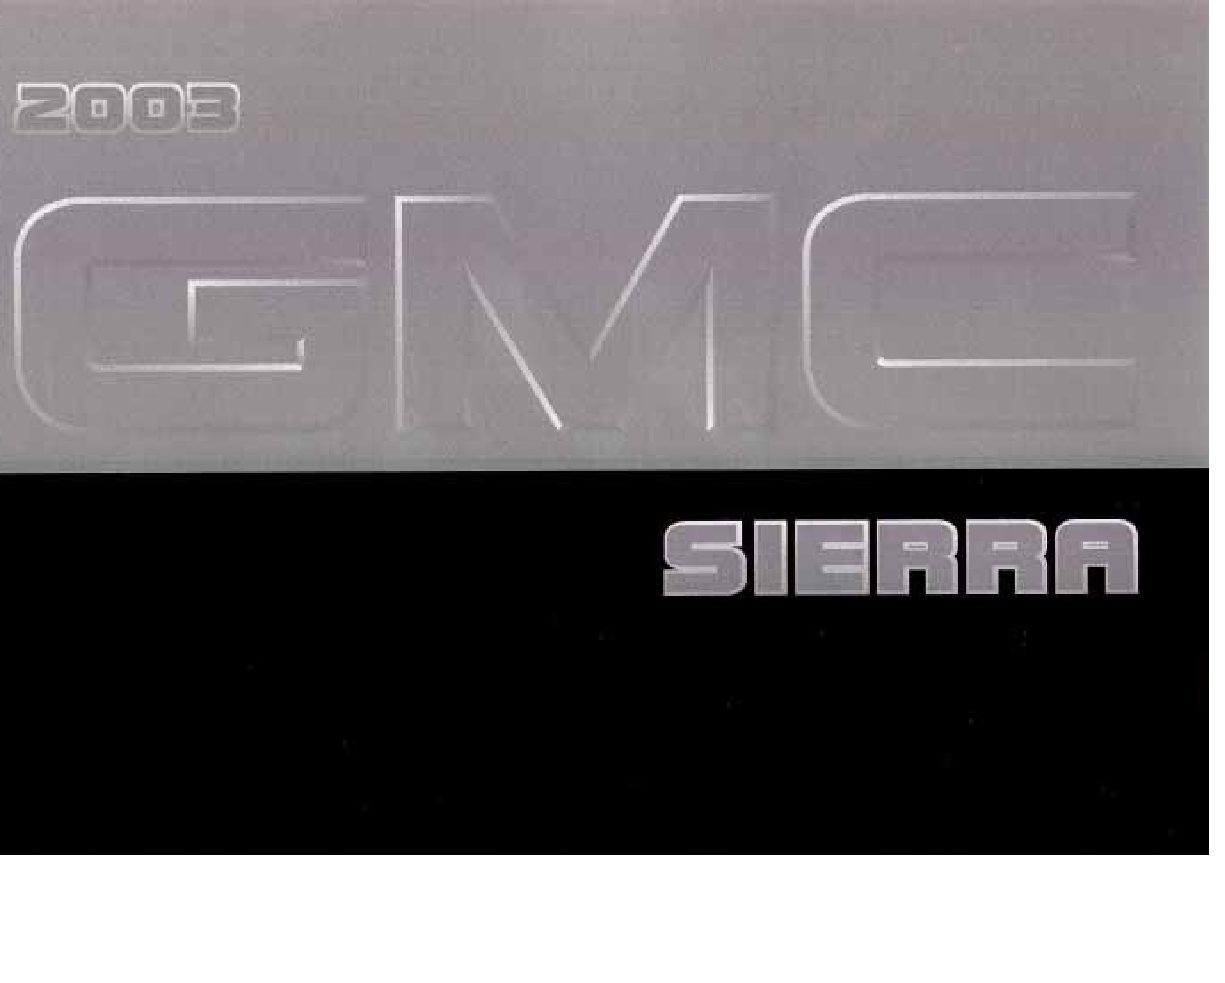 2003 GMC Sierra Image